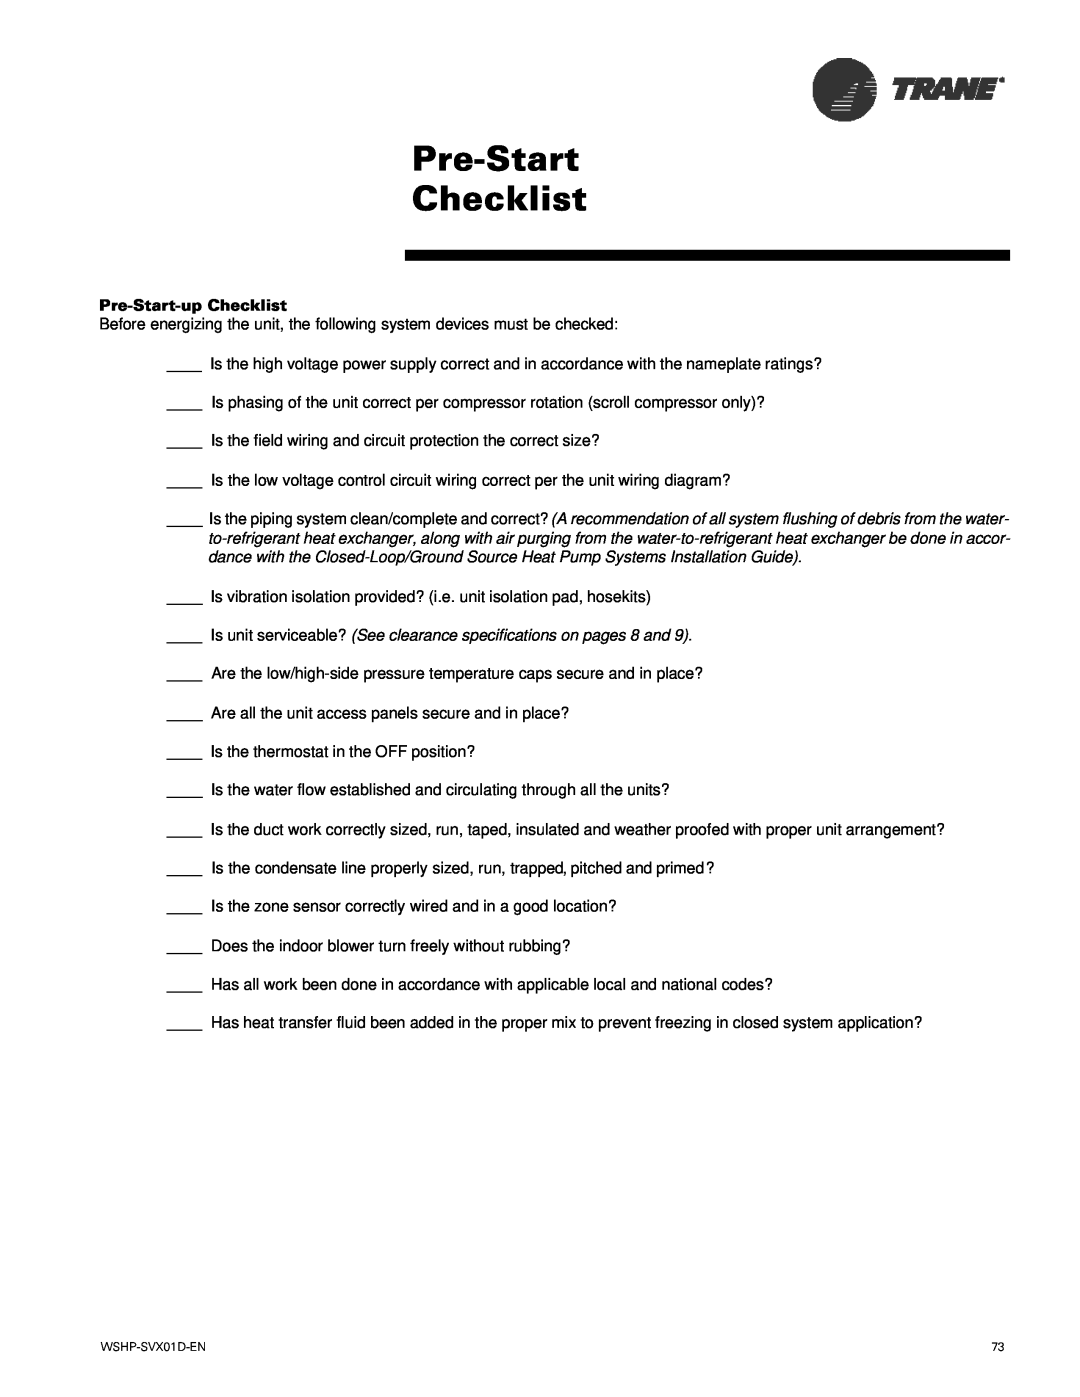 Trane GEV, GEH manual Pre-Start Checklist, Pre-Start-upChecklist 